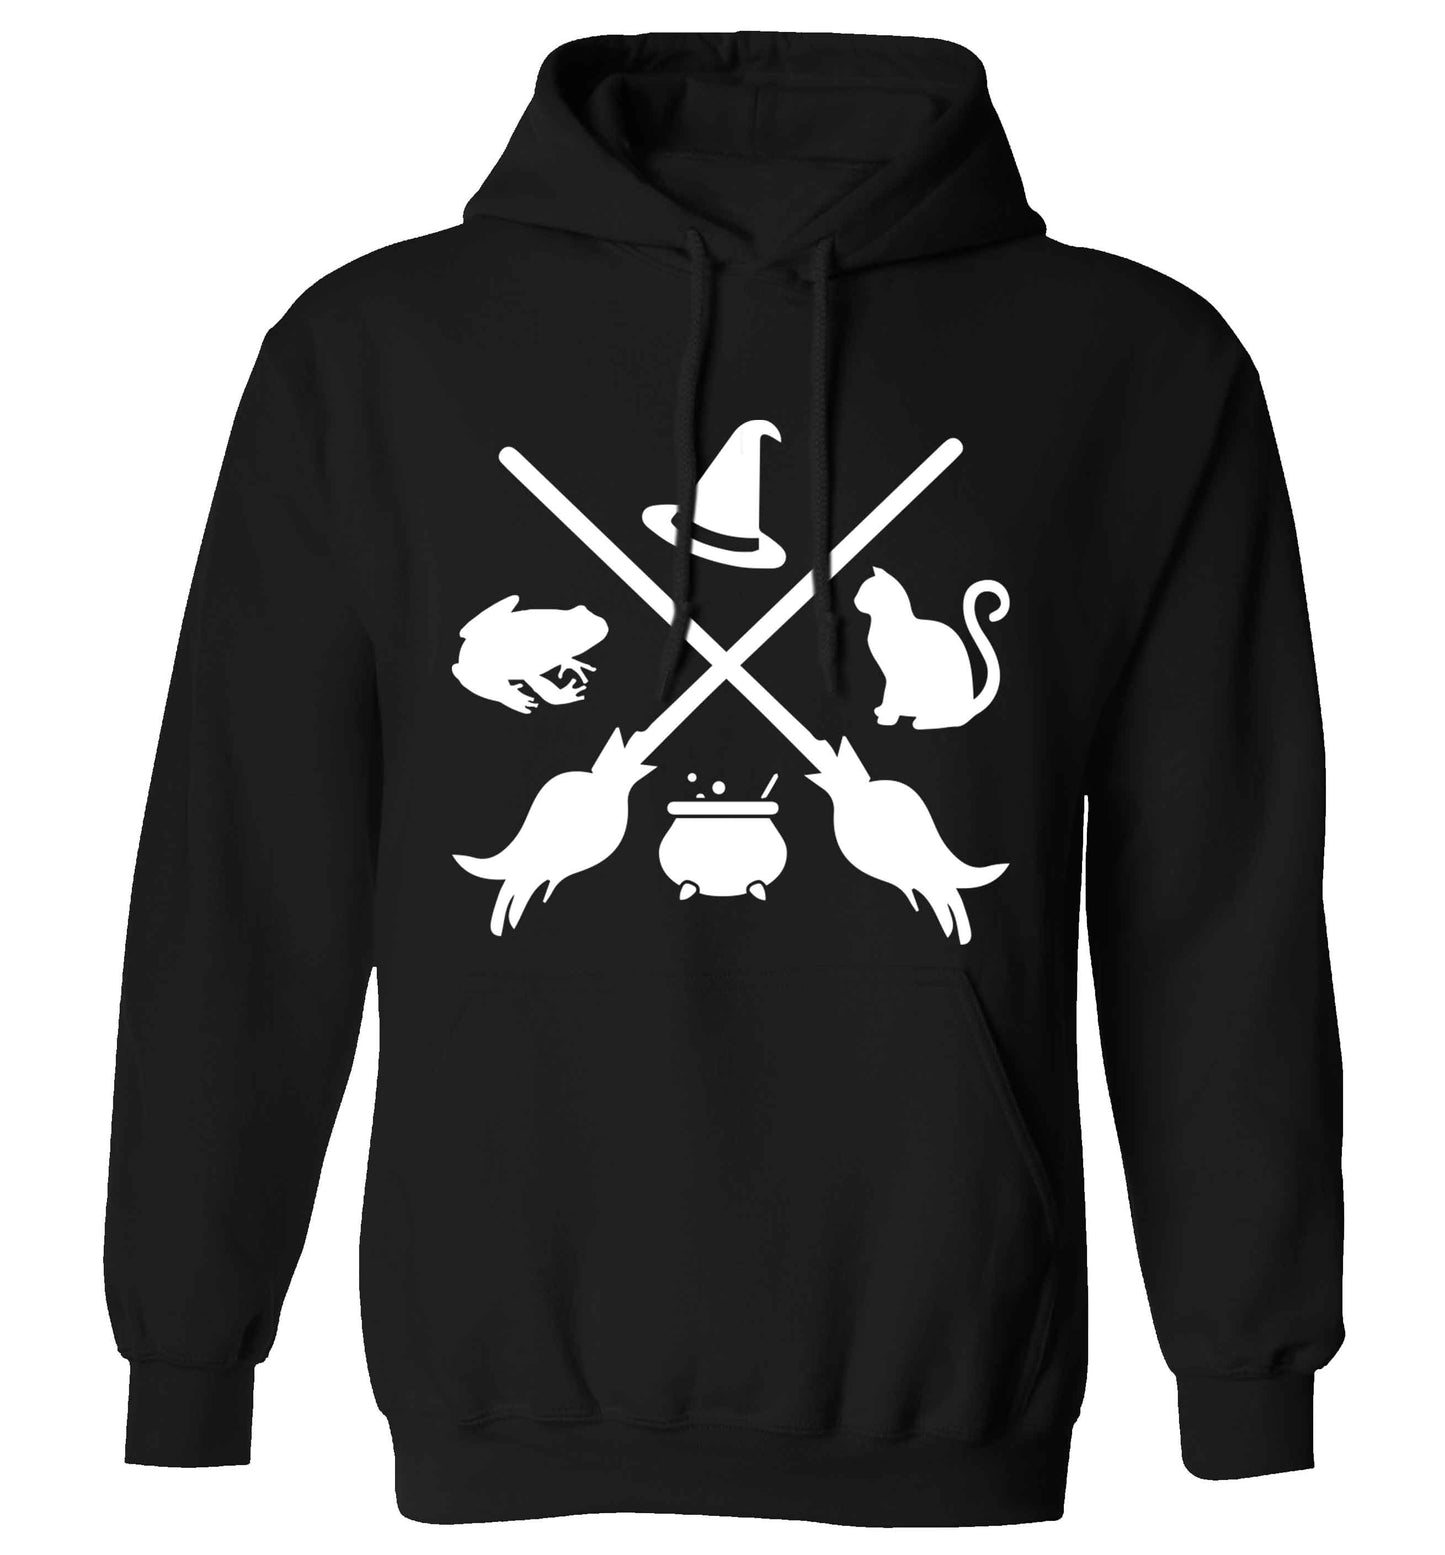 Witch symbol adults unisex black hoodie 2XL